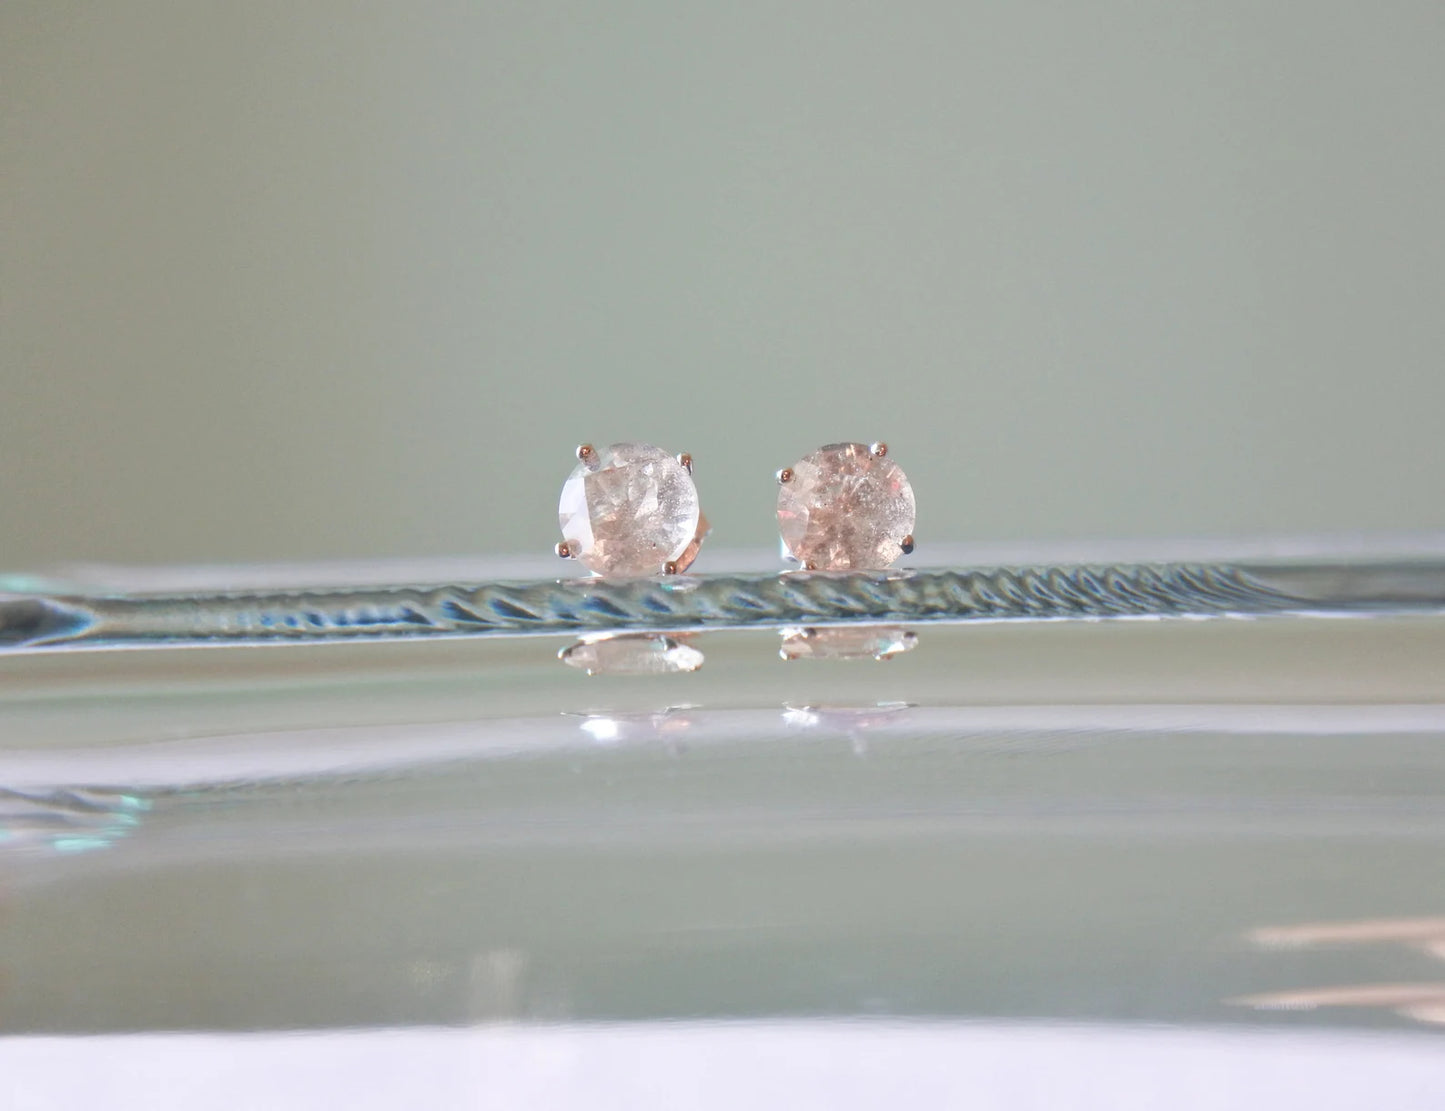 4mm, 5mm, 6mm Libyan Desert Glass Faceted Stud Earrings Sterling Silver jewelry tektite Libyan Glass, genuine Impact Glass gemstone earrings